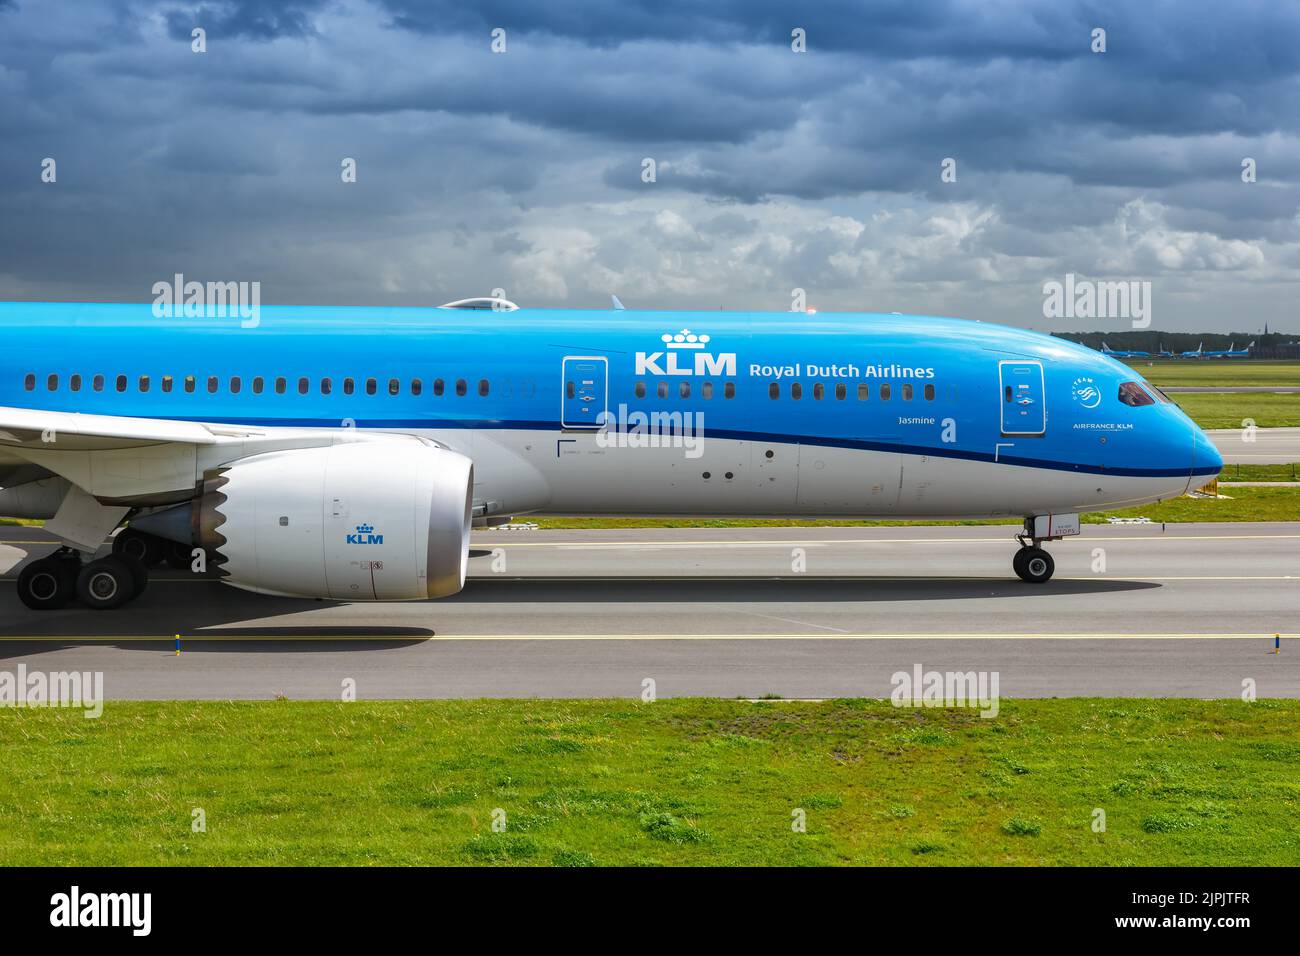 airplane, klm royal dutch airlines, flughafen amsterdam schiphol, airplanes, plane, planes Stock Photo